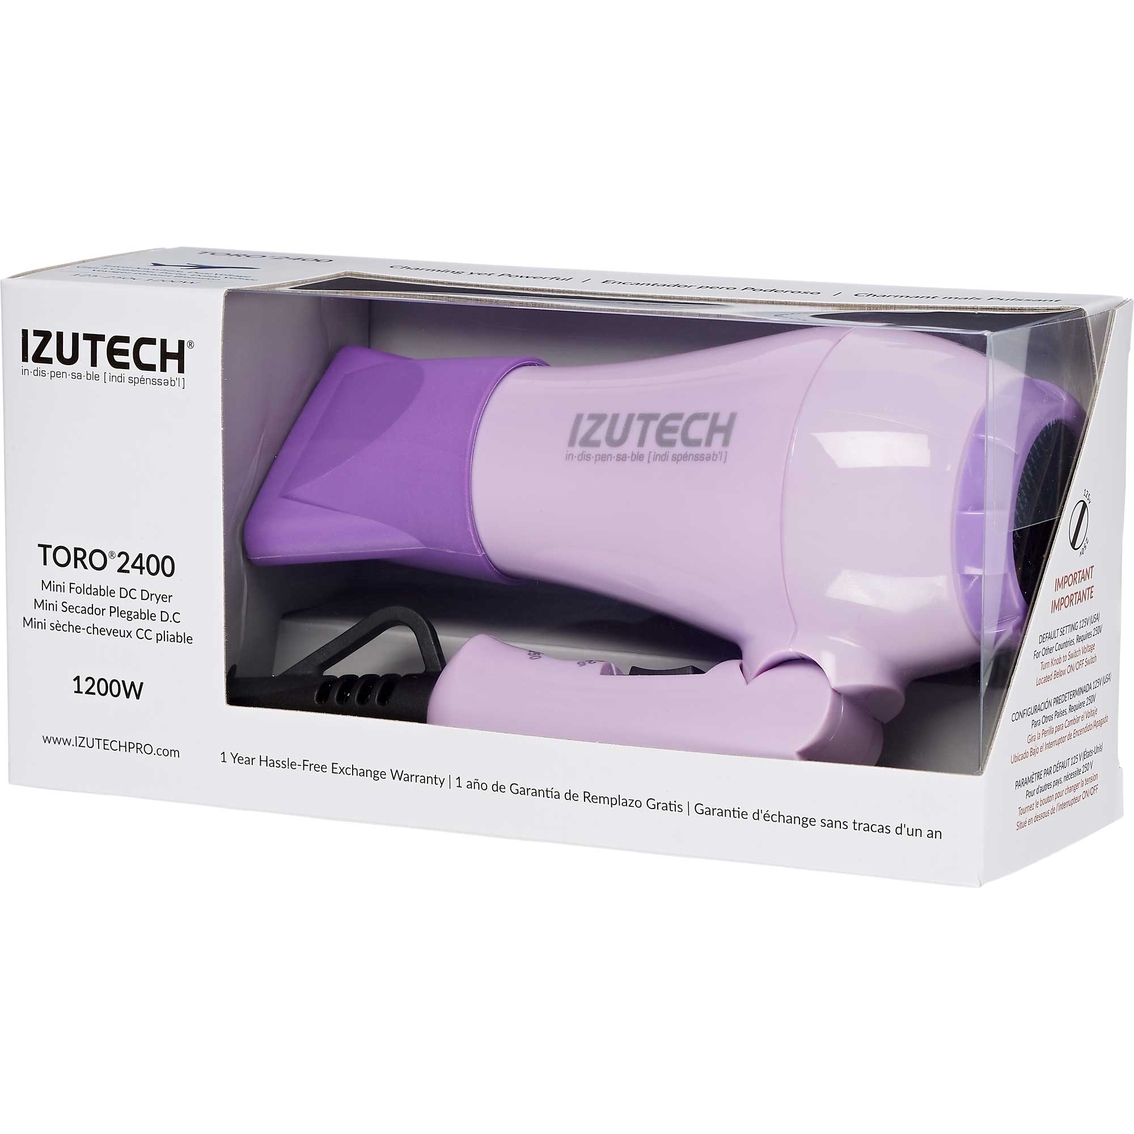 Izutech Toro 2400 Mini Foldable Dryer - Image 5 of 5